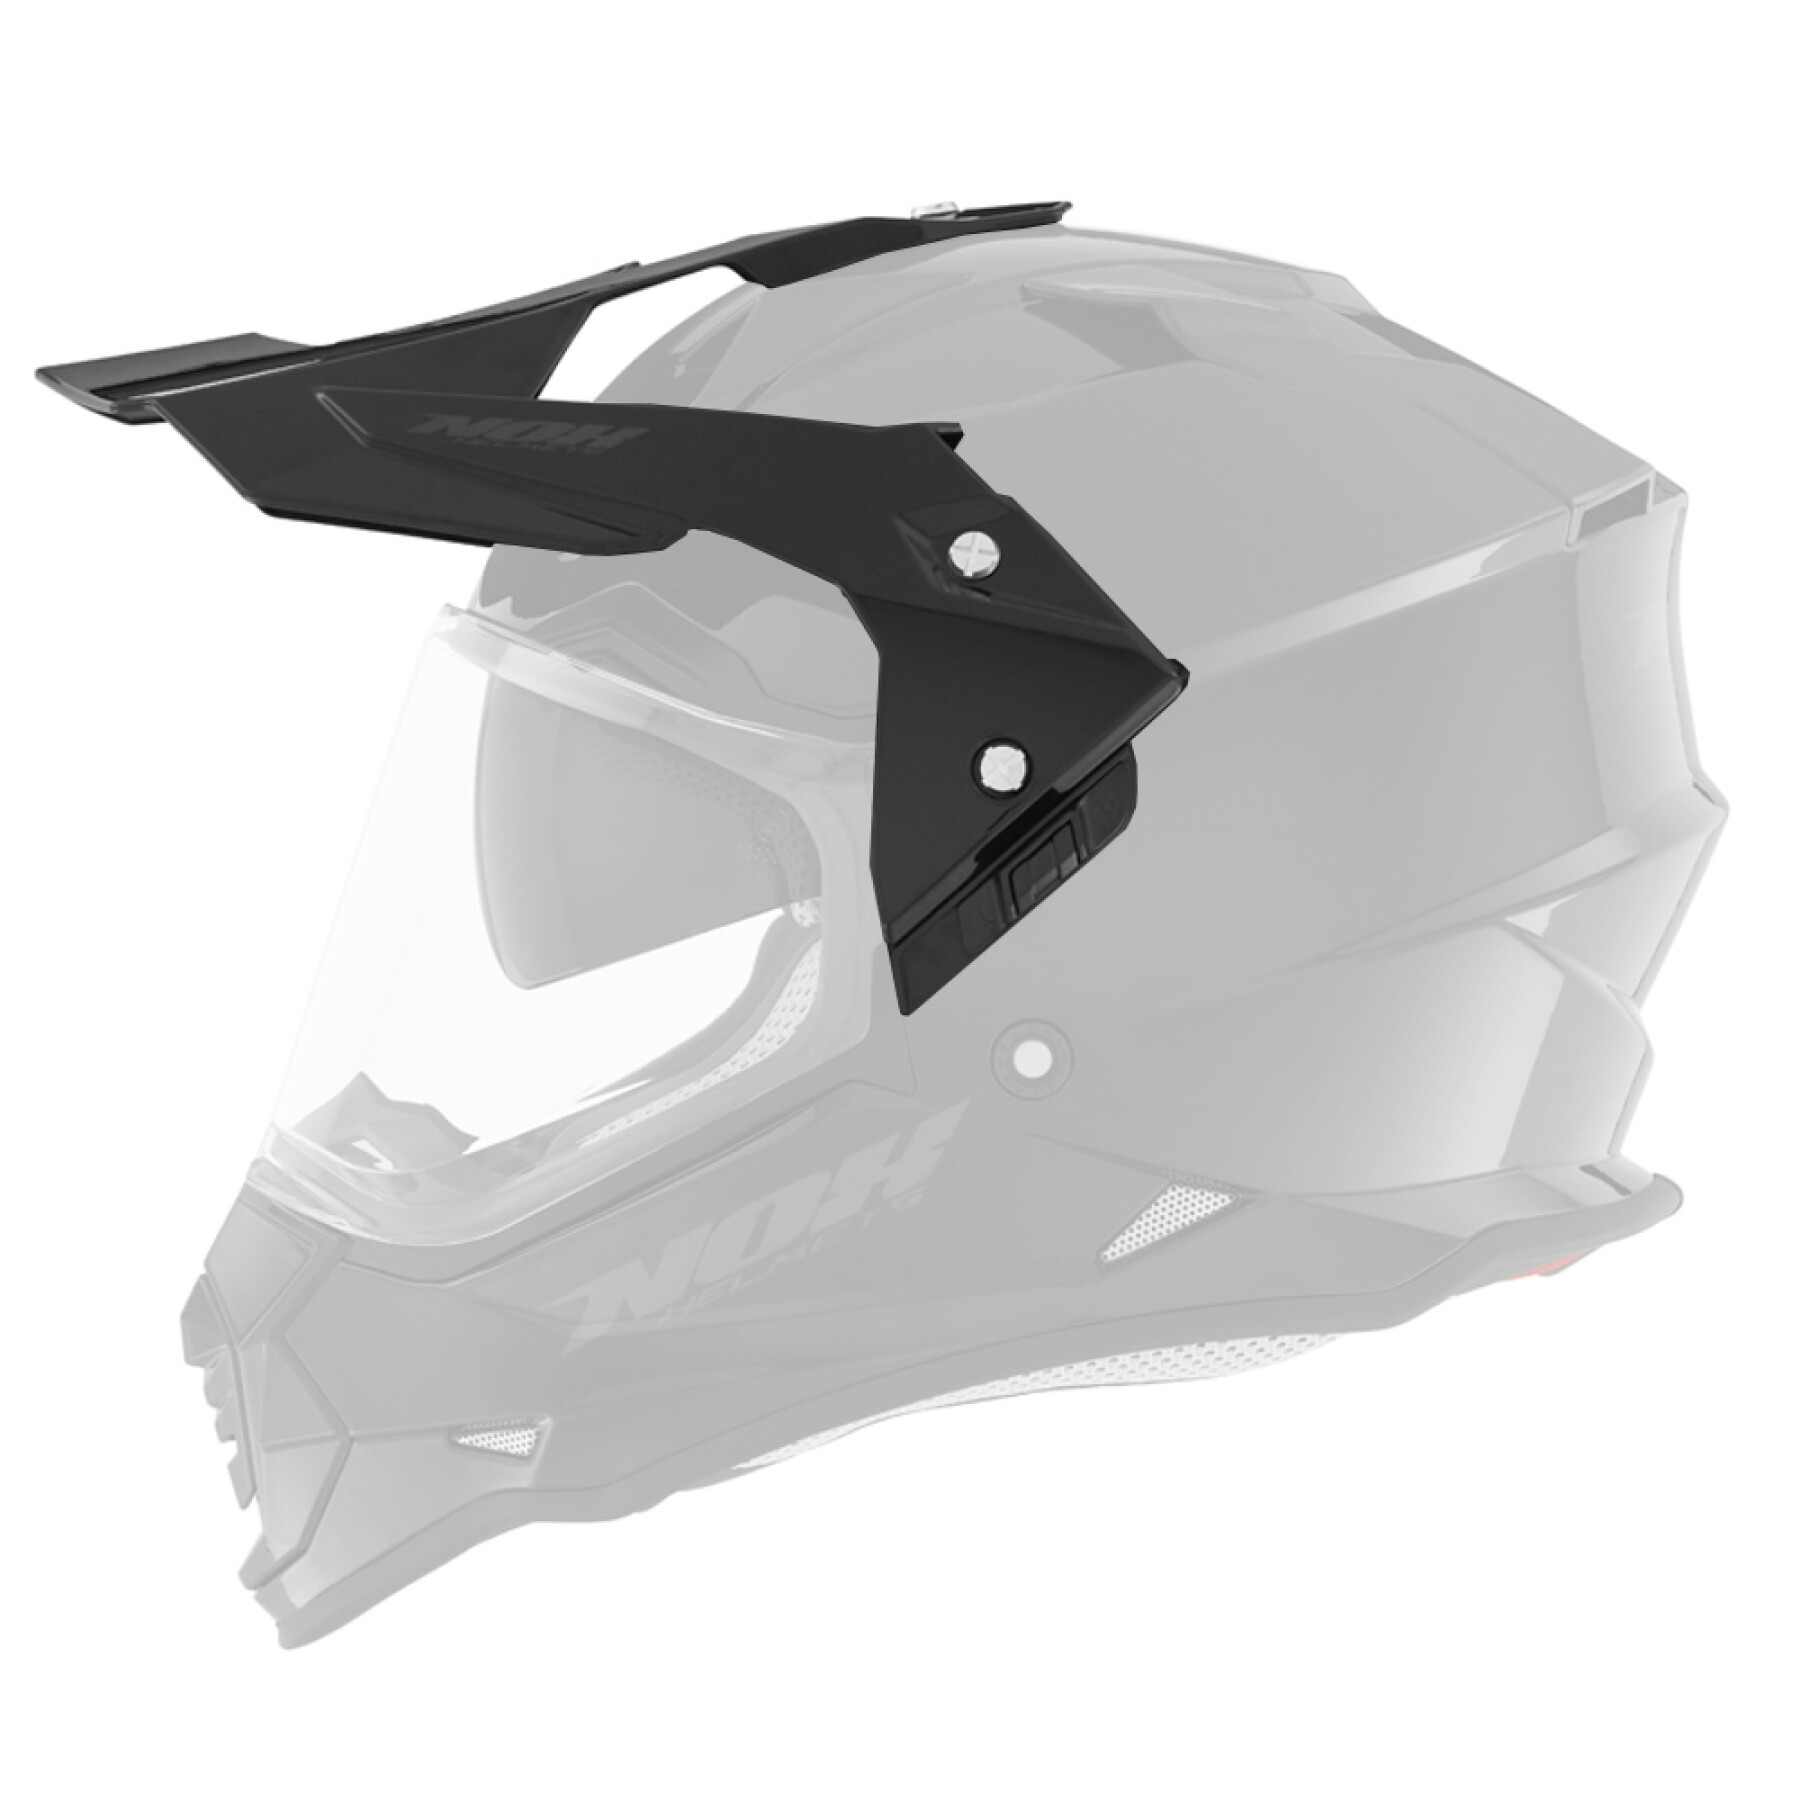 Visiera per casco da motocross Nox 312